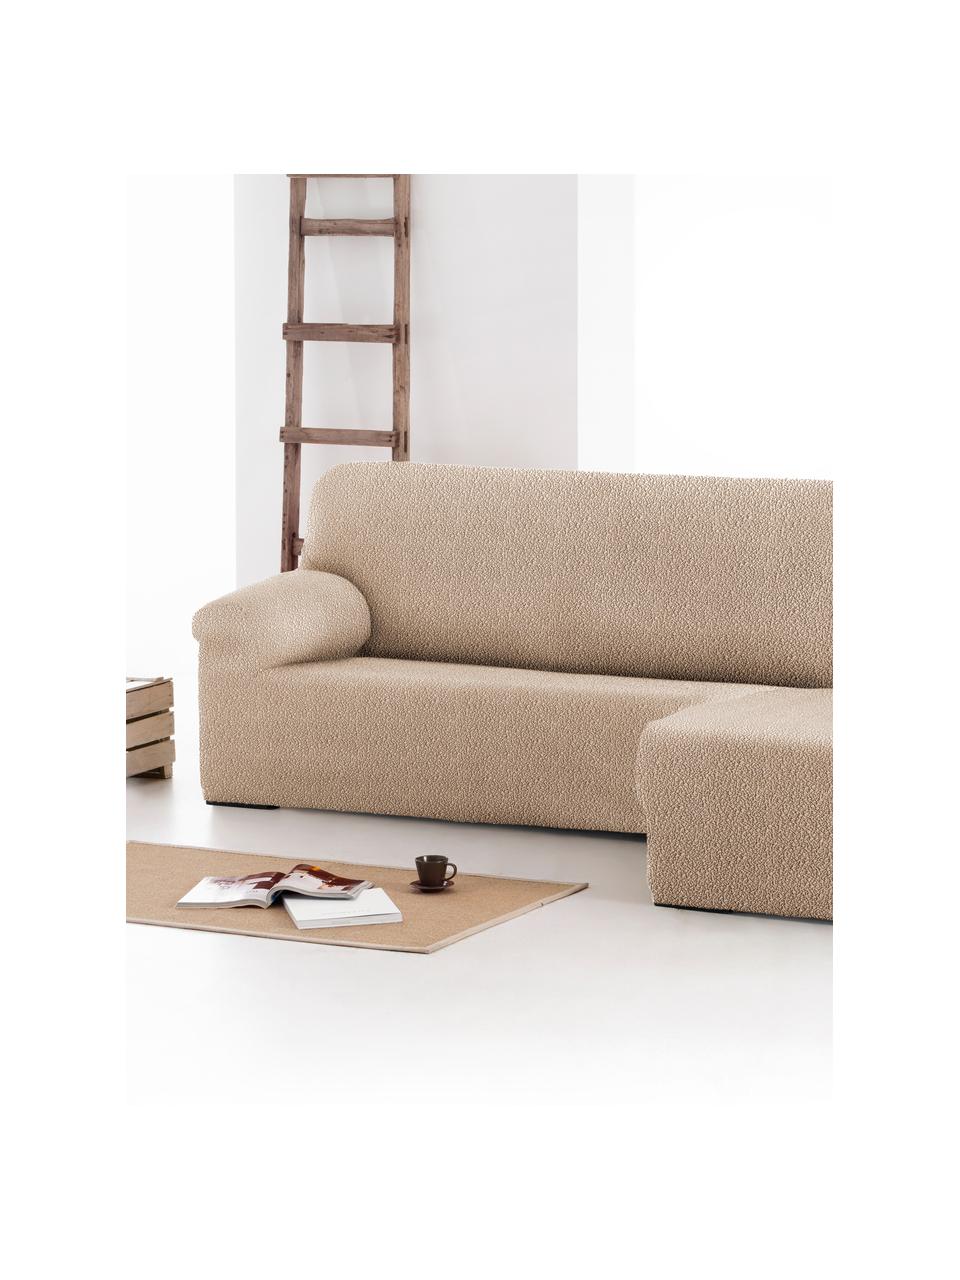 Funda de sofá rinconero Roc, 55% poliéster, 35% algodón, 10% elastómero, Beige, An 360 x F 180 cm, chaise longue derecha